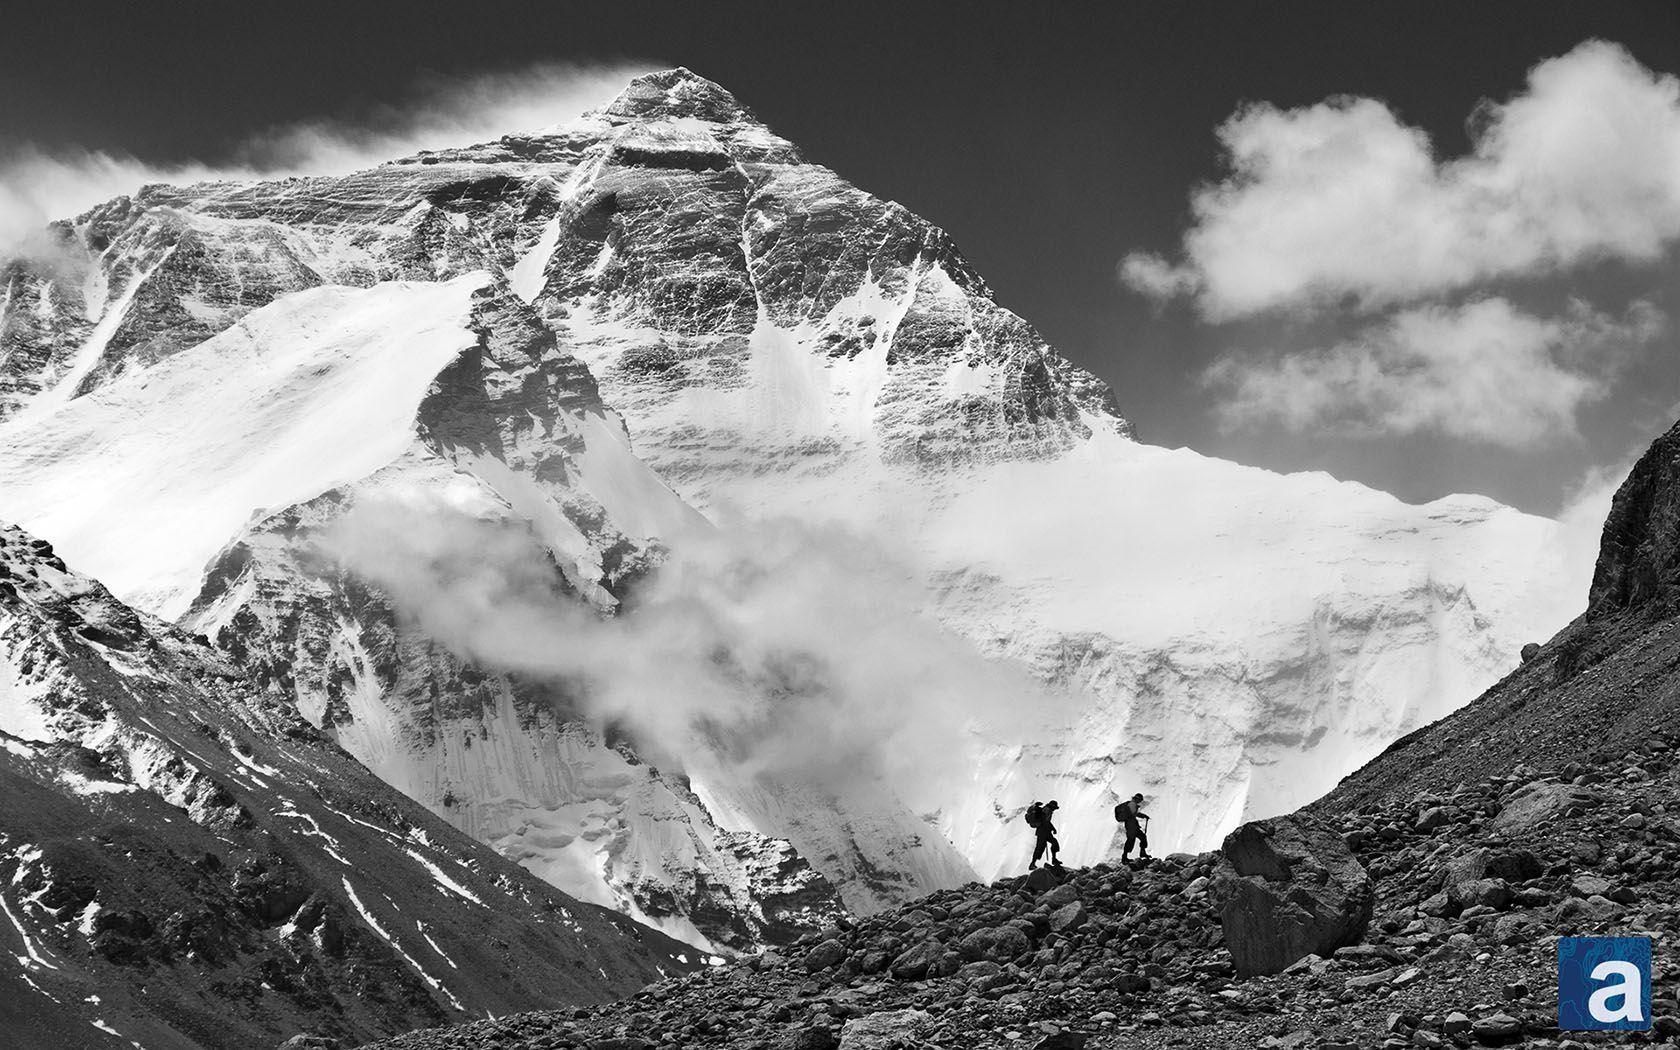 Wallpaper Wednesday: Mt. Everest